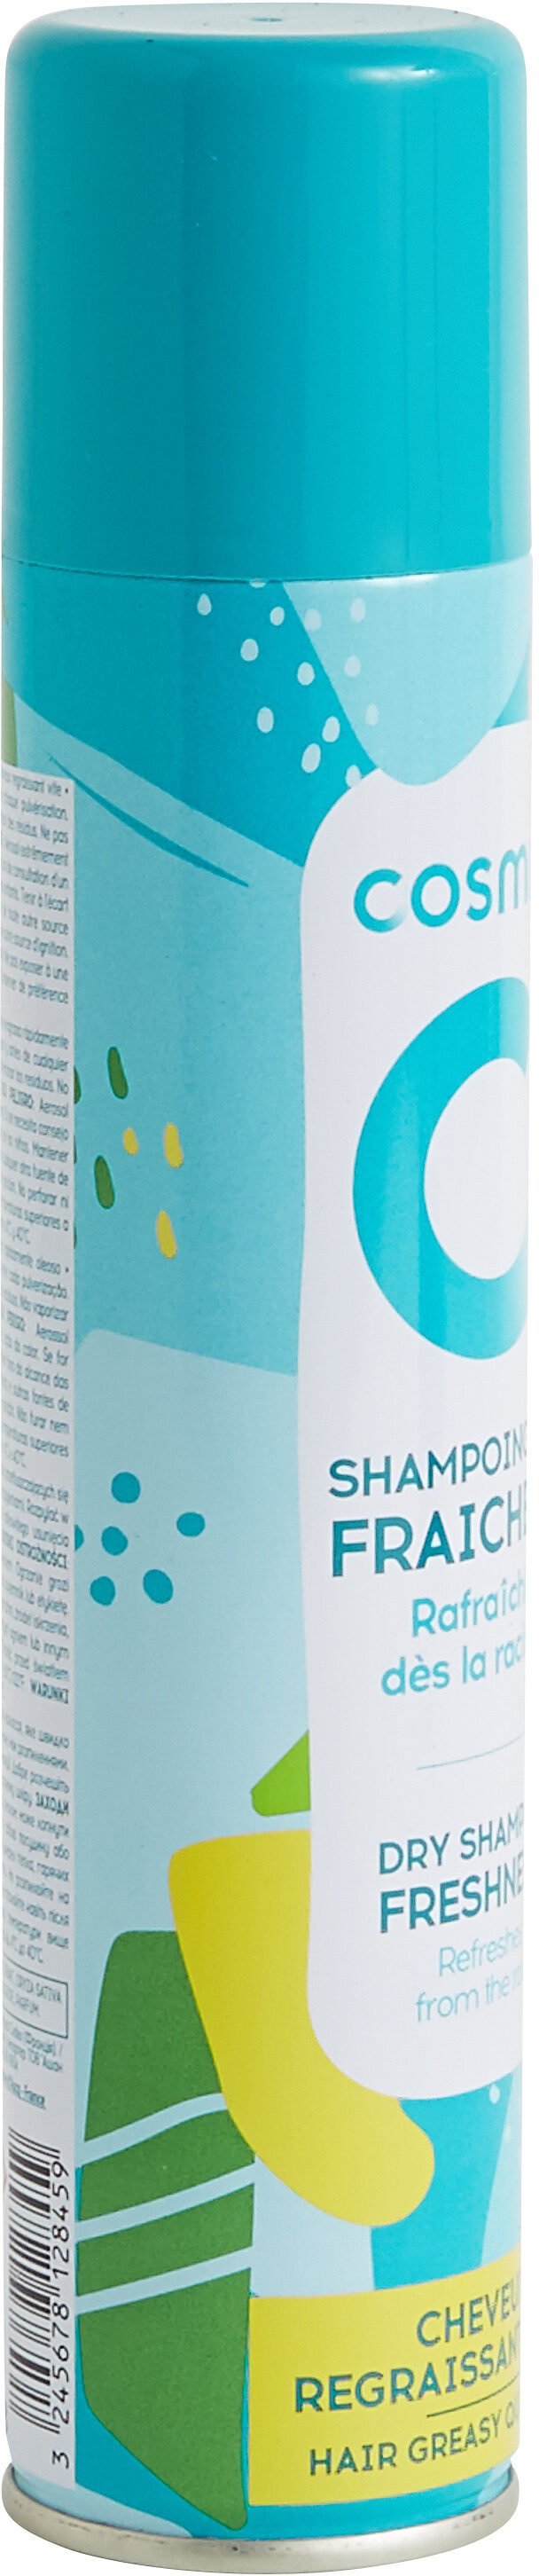 Cosmia - shampoing sec - fraicheur - 200 ml / volume nominal 270ml ? - Tuote - fr